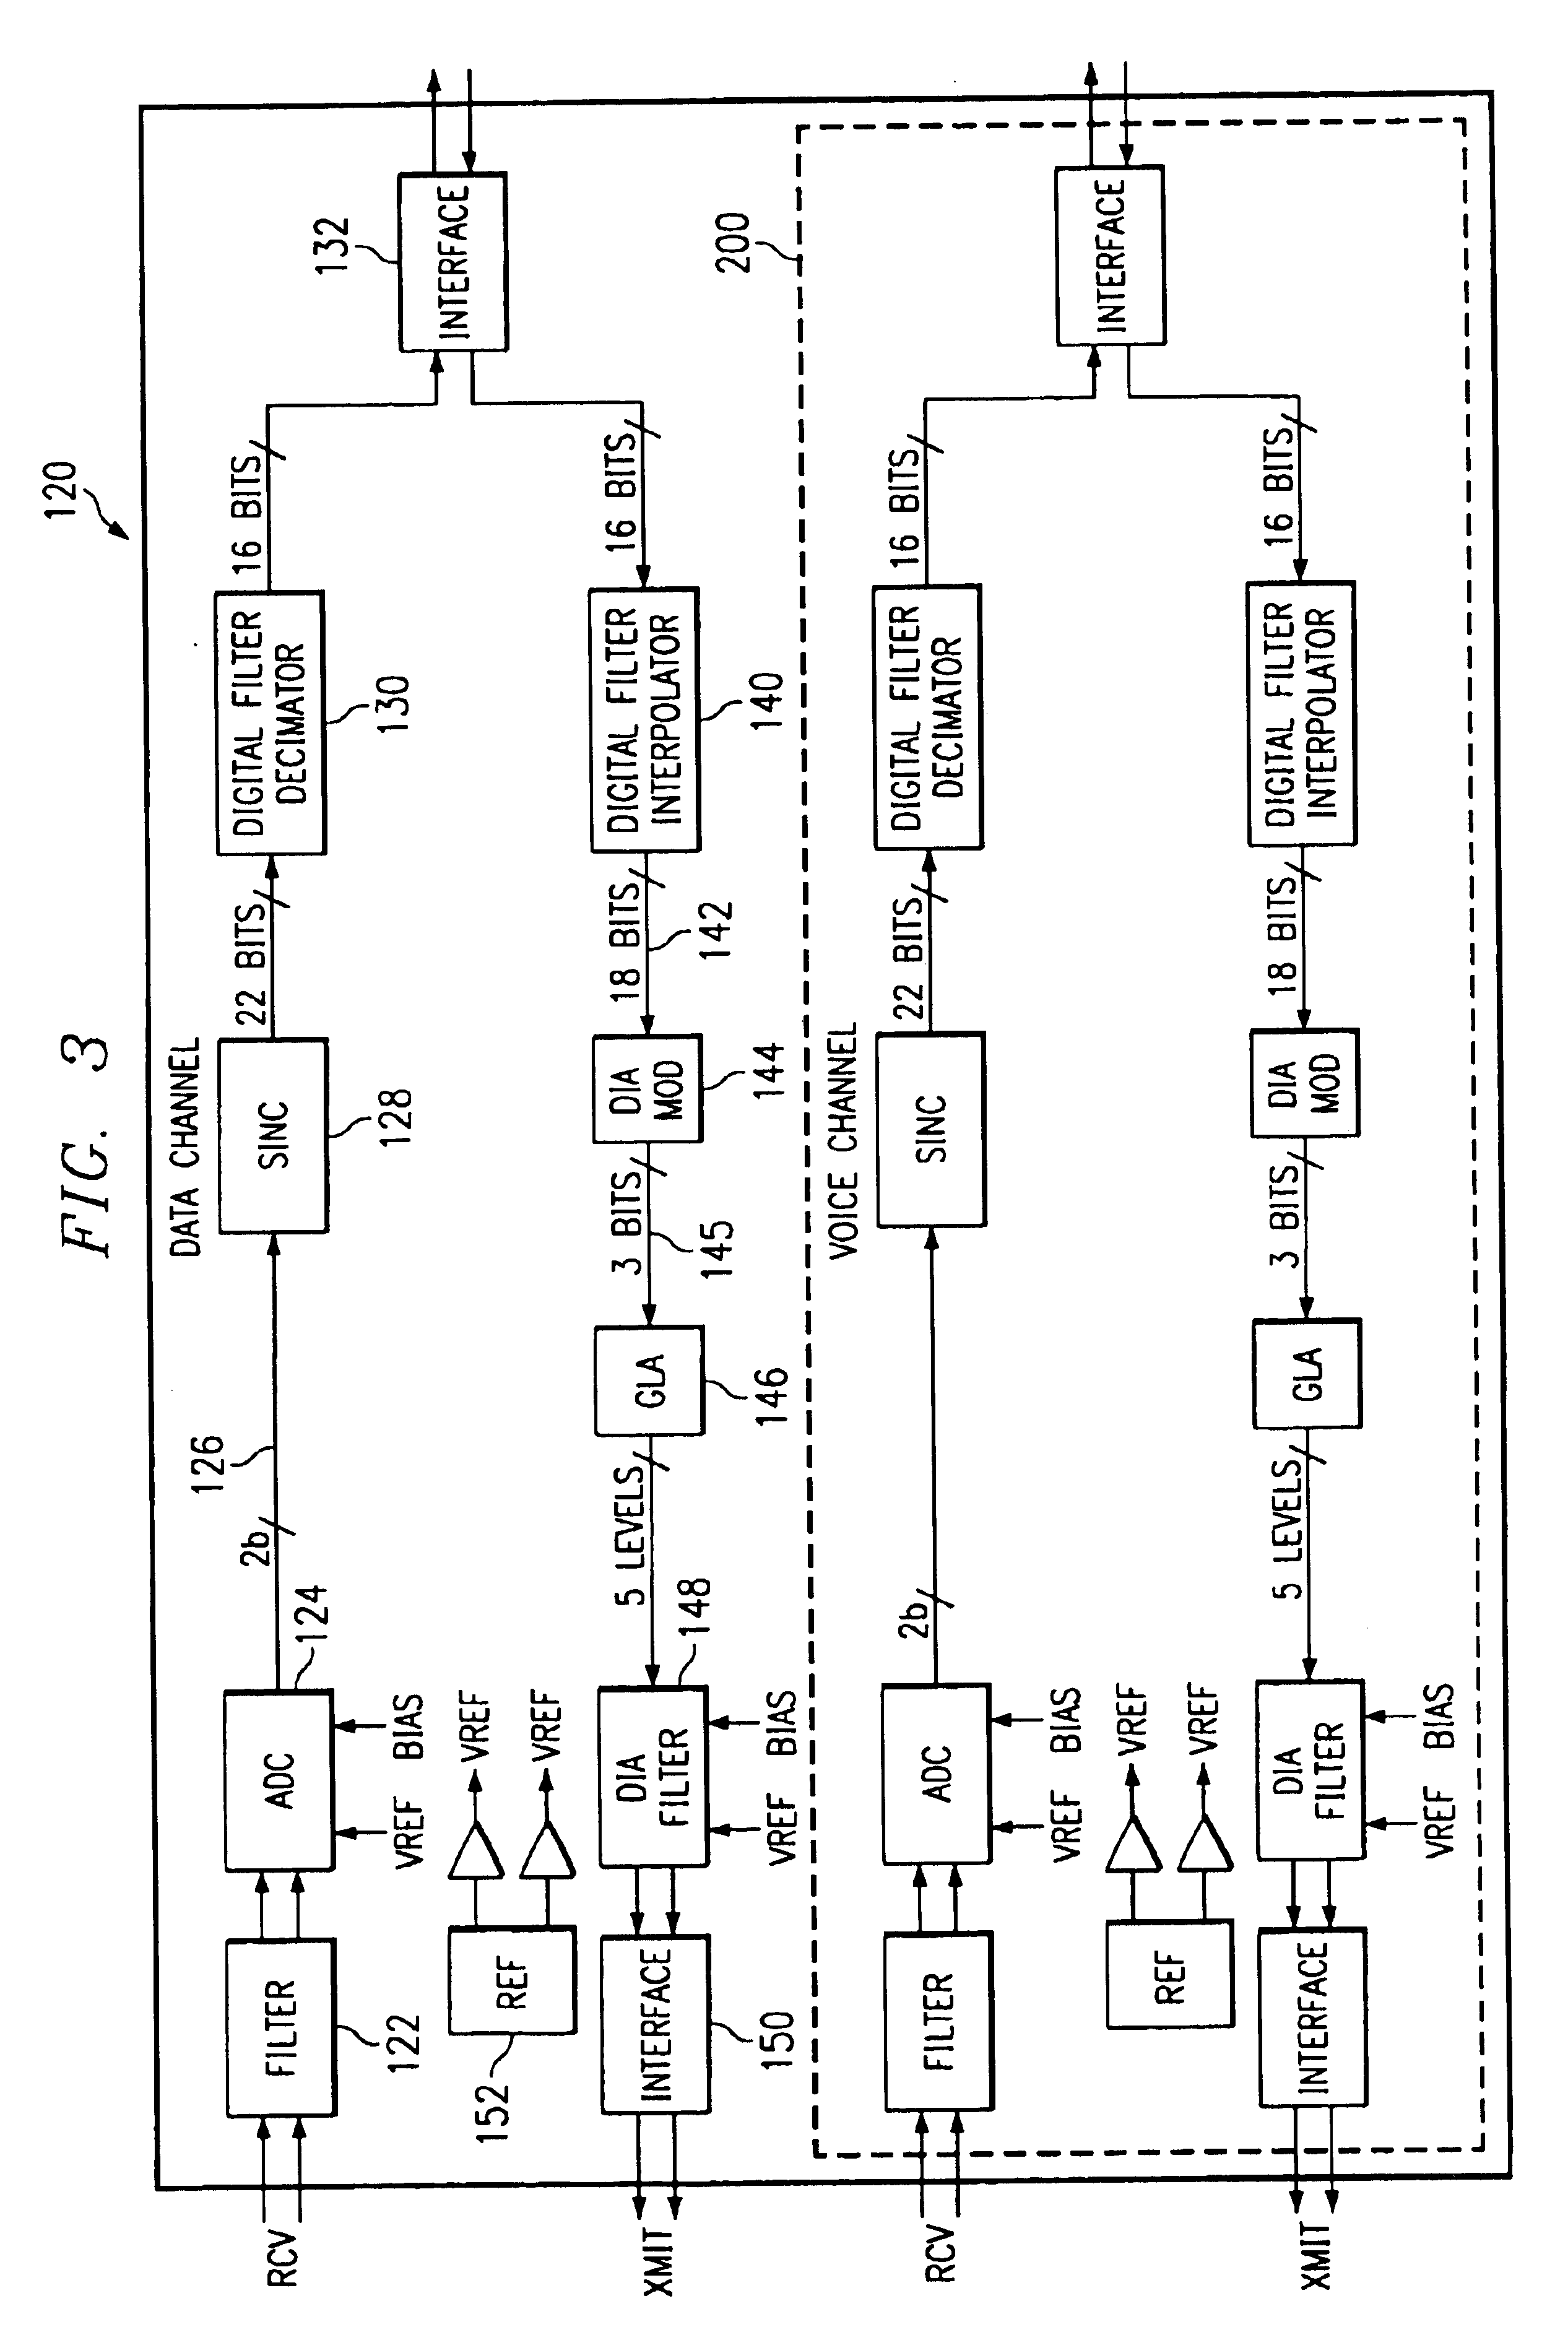 Device and method of digital gain programming using sigma-delta modulator